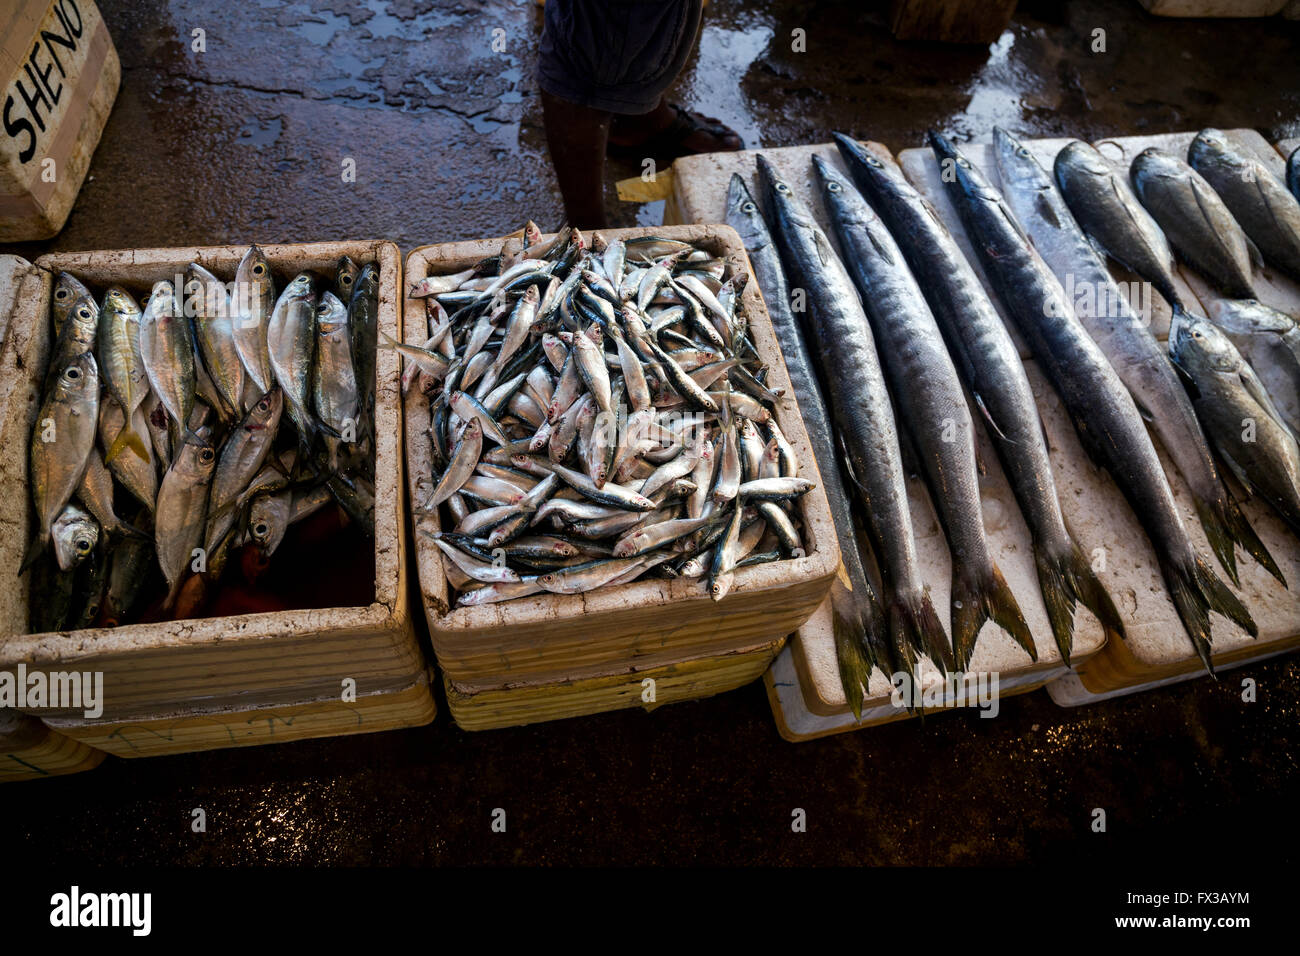 Fish for sale at Negombo fish market (Lellama fish market), Negombo, Sri Lanka, Asia Stock Photo